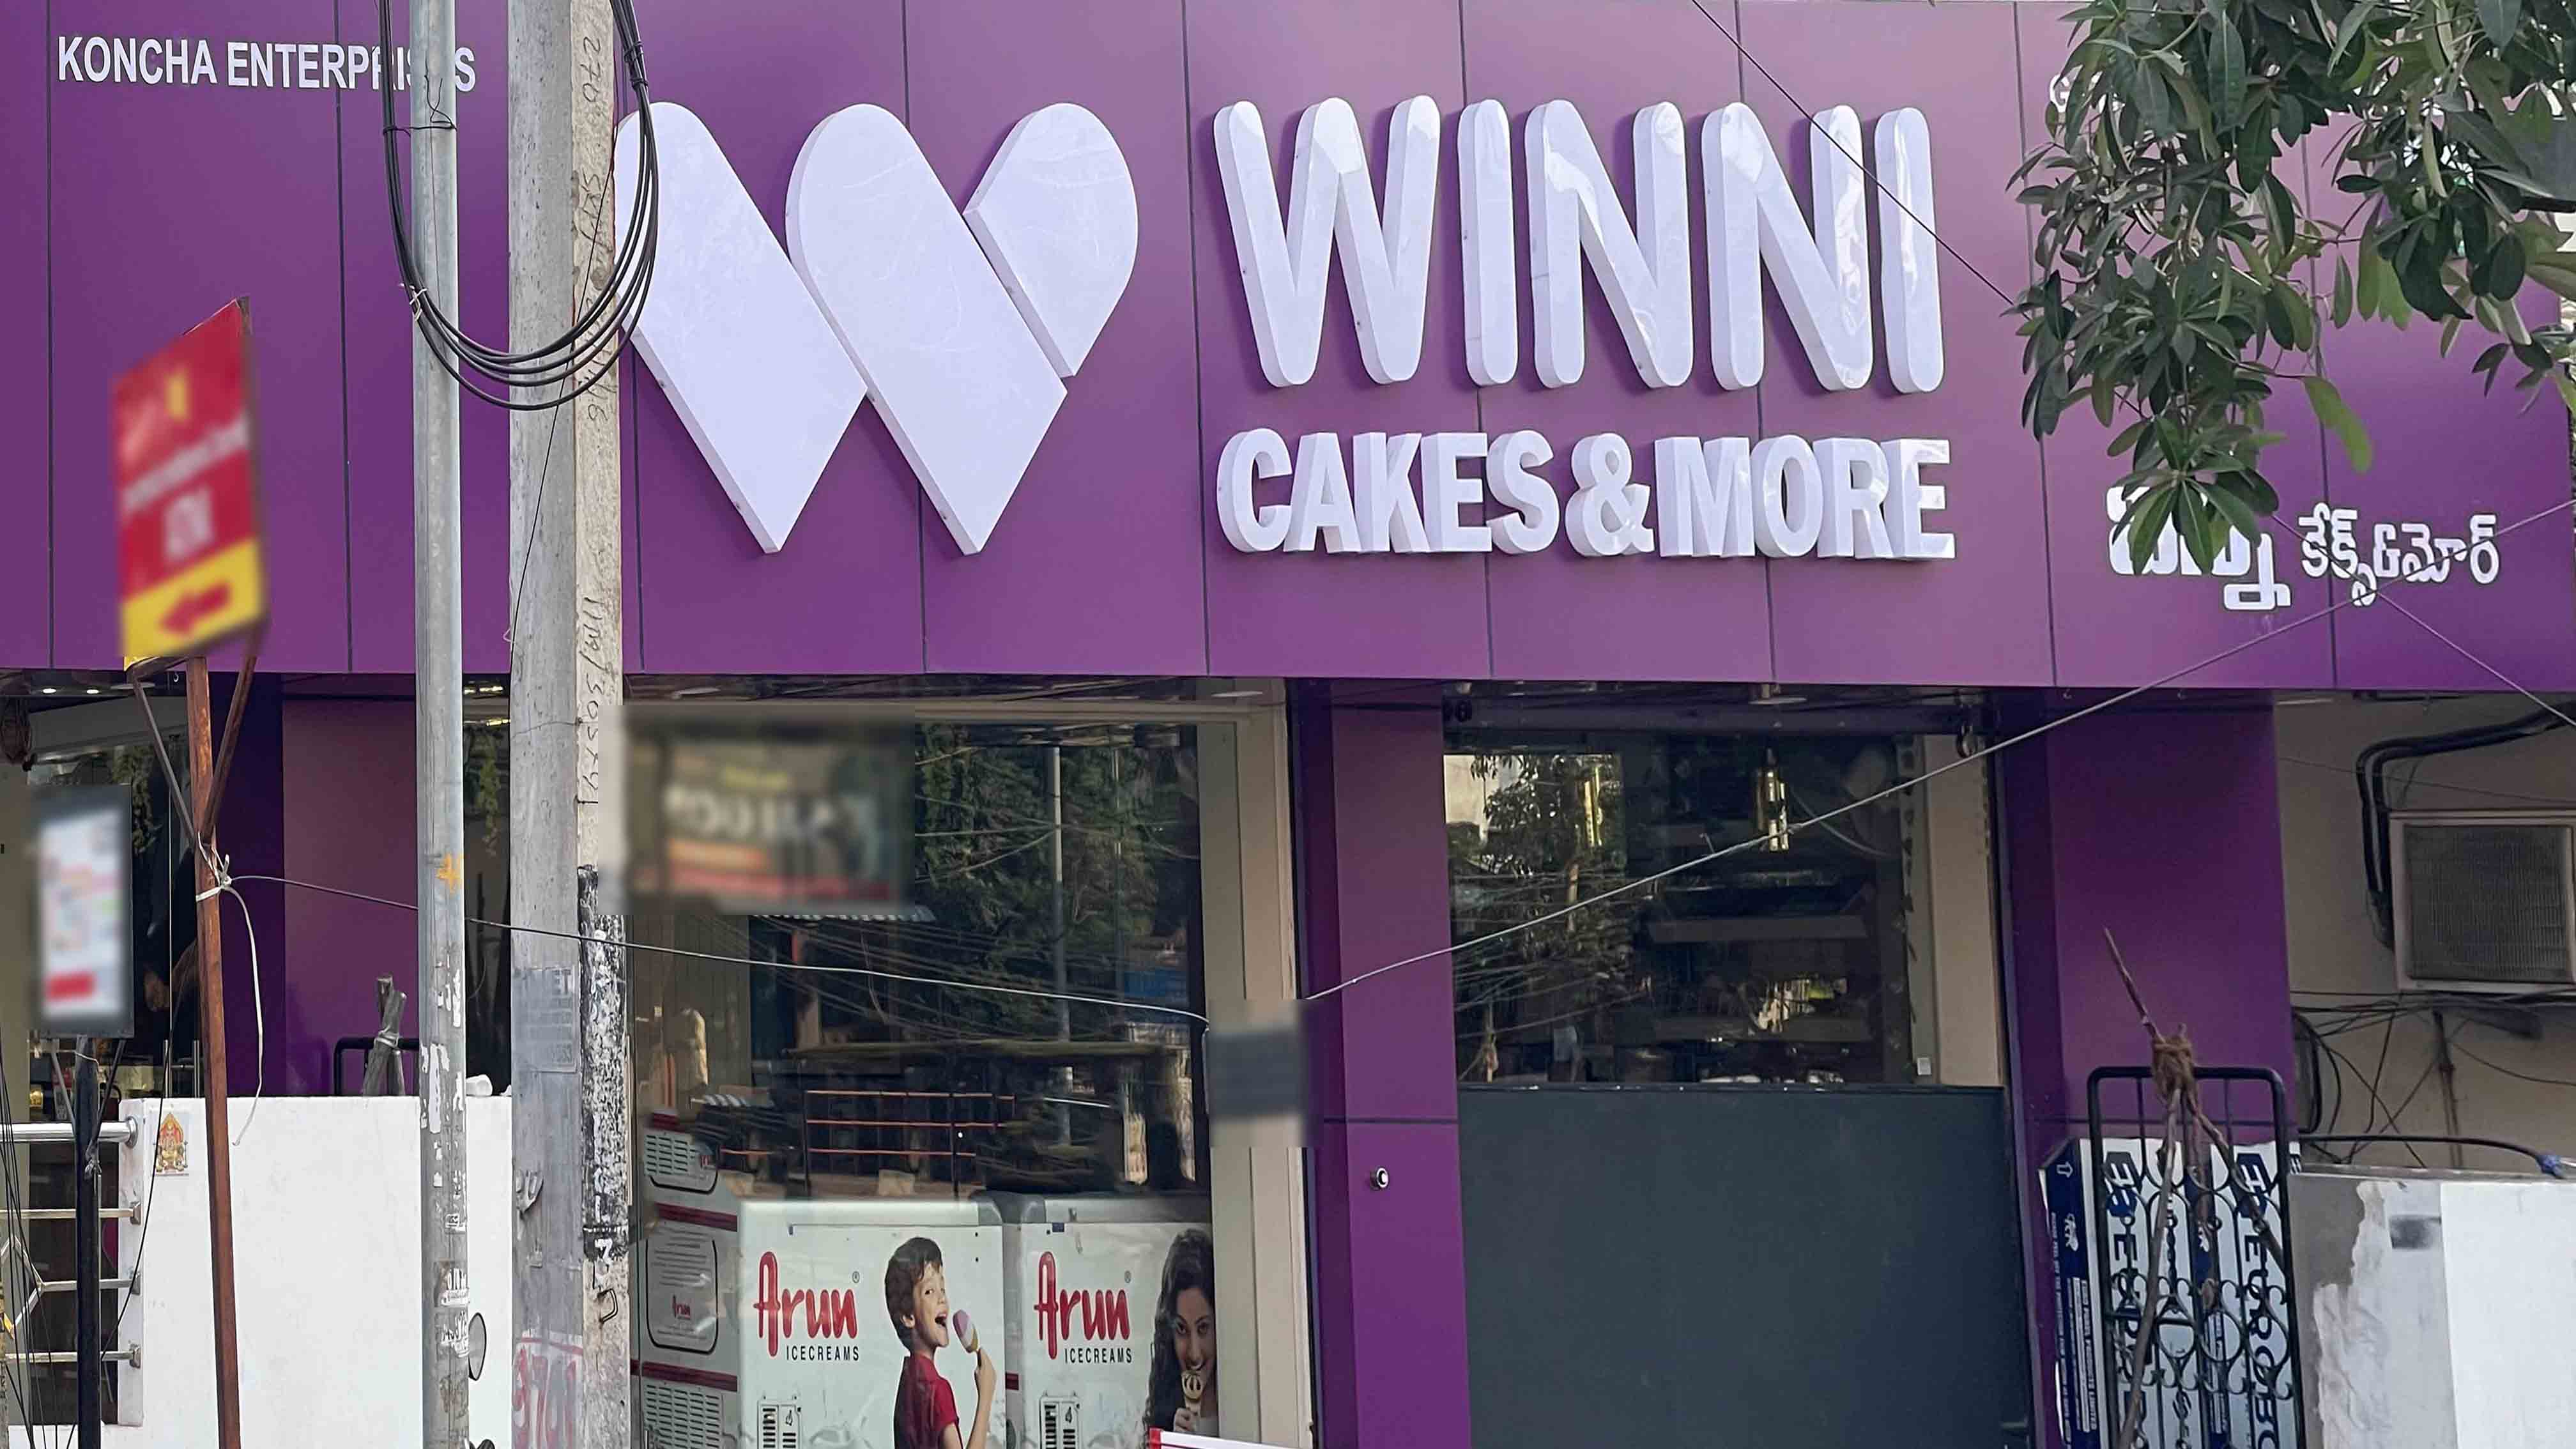 Winni Cakes & More - Bakery - Amritsar - Punjab | Yappe.in